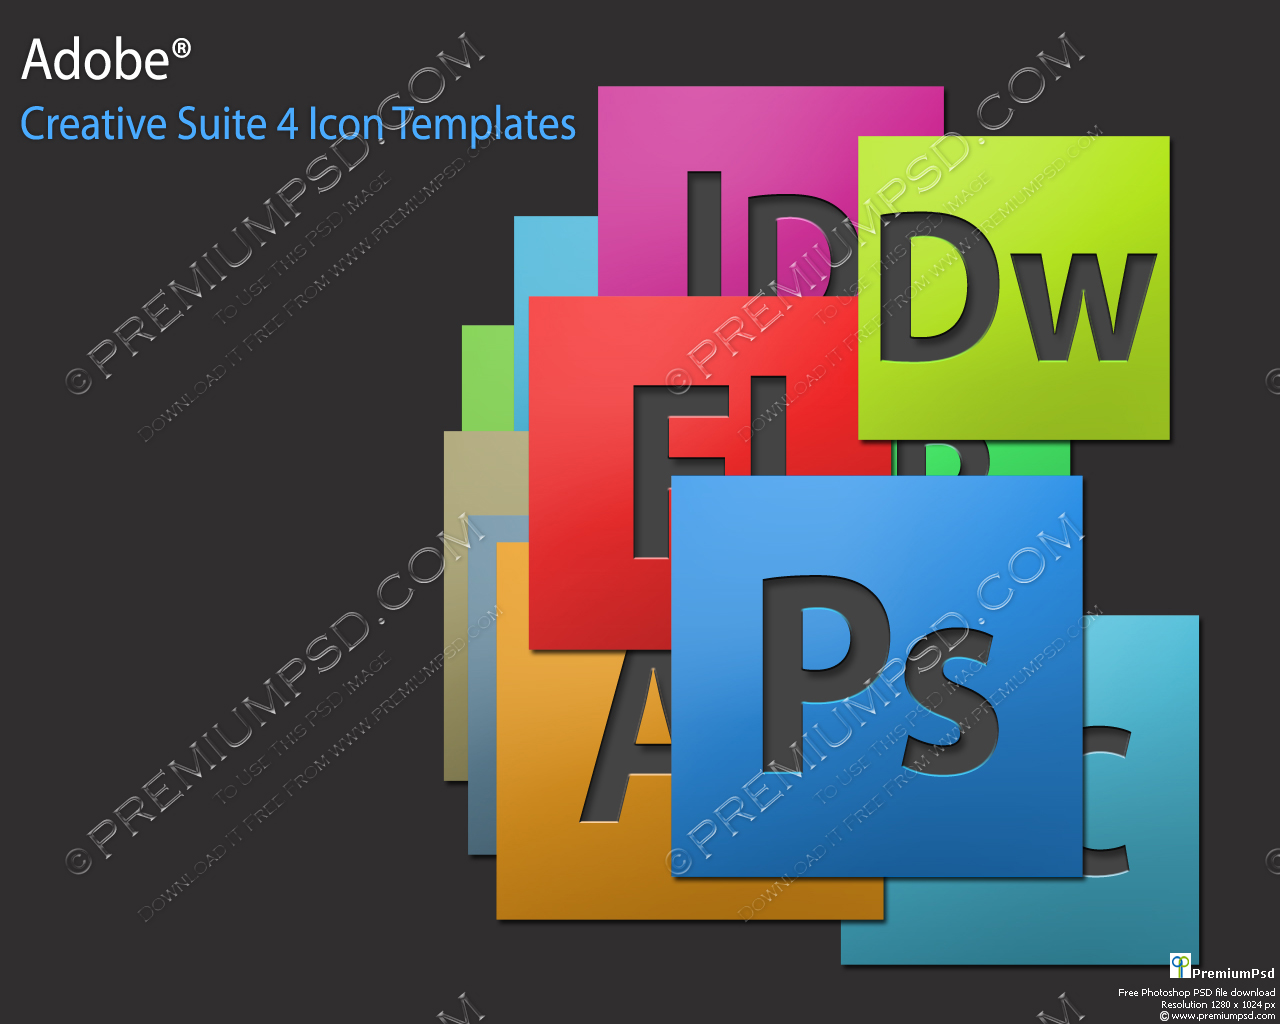 Adobe Creative Suite 4 Logo Logos Rates